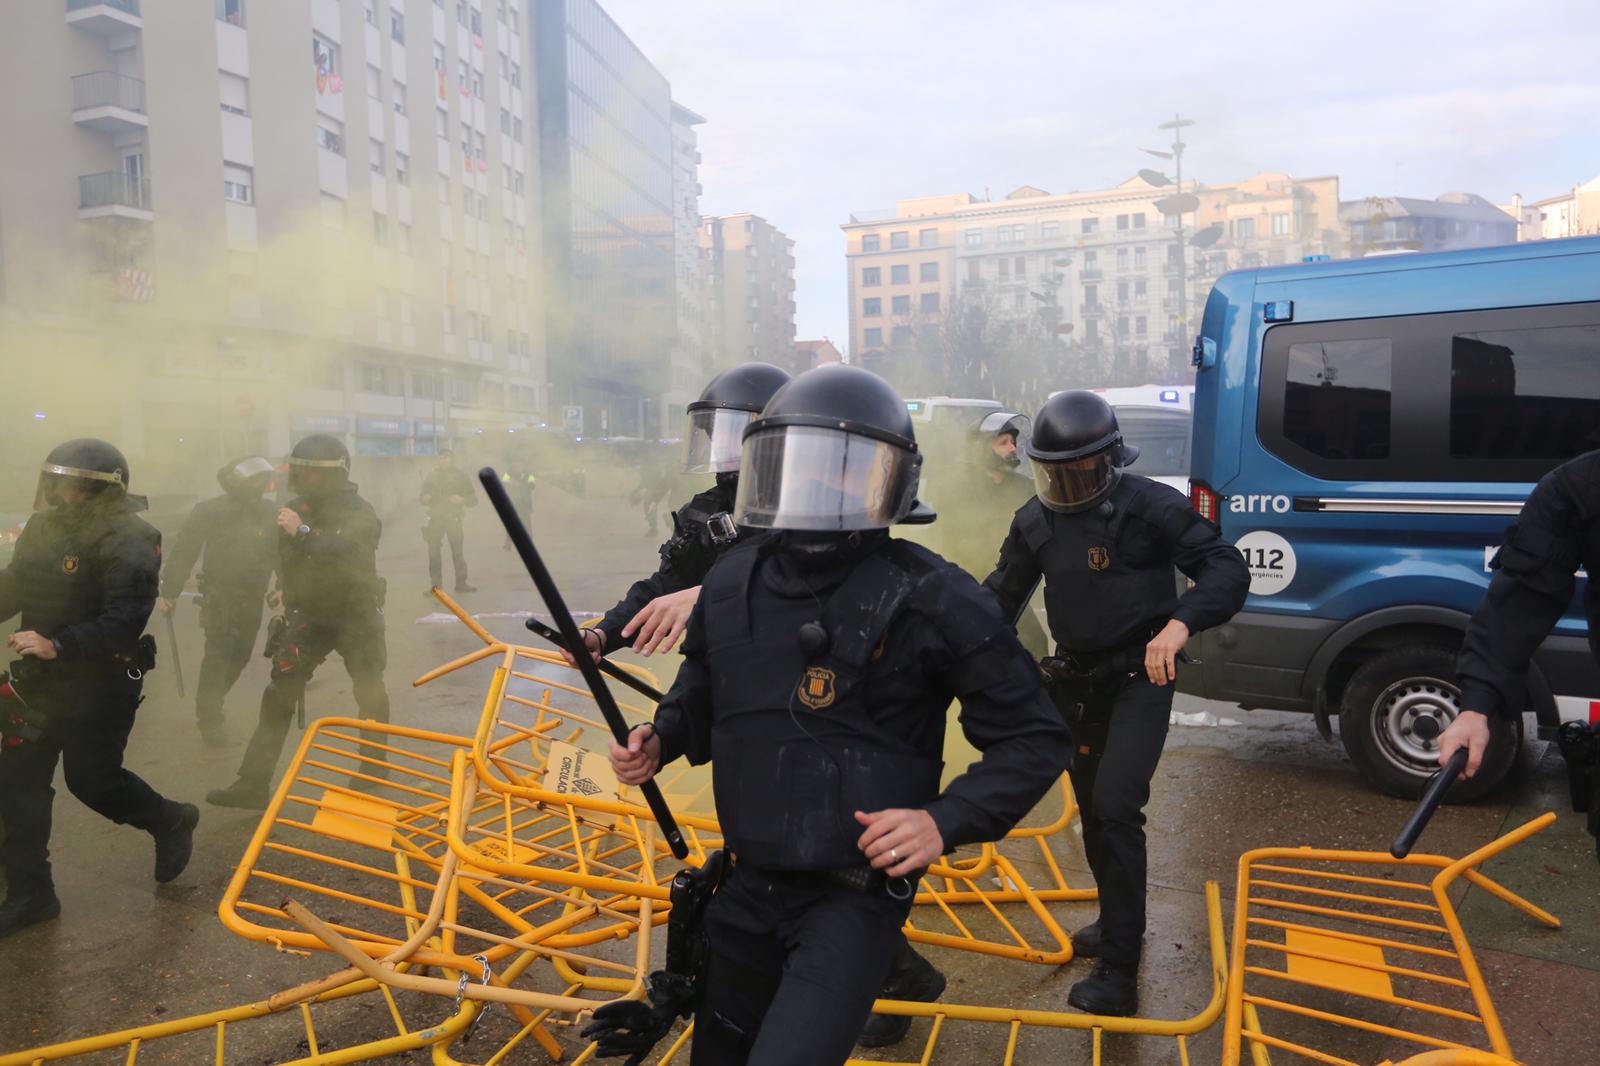 Mossos per la Independència denuncia que agentes gritaron en Girona "a por ellos"